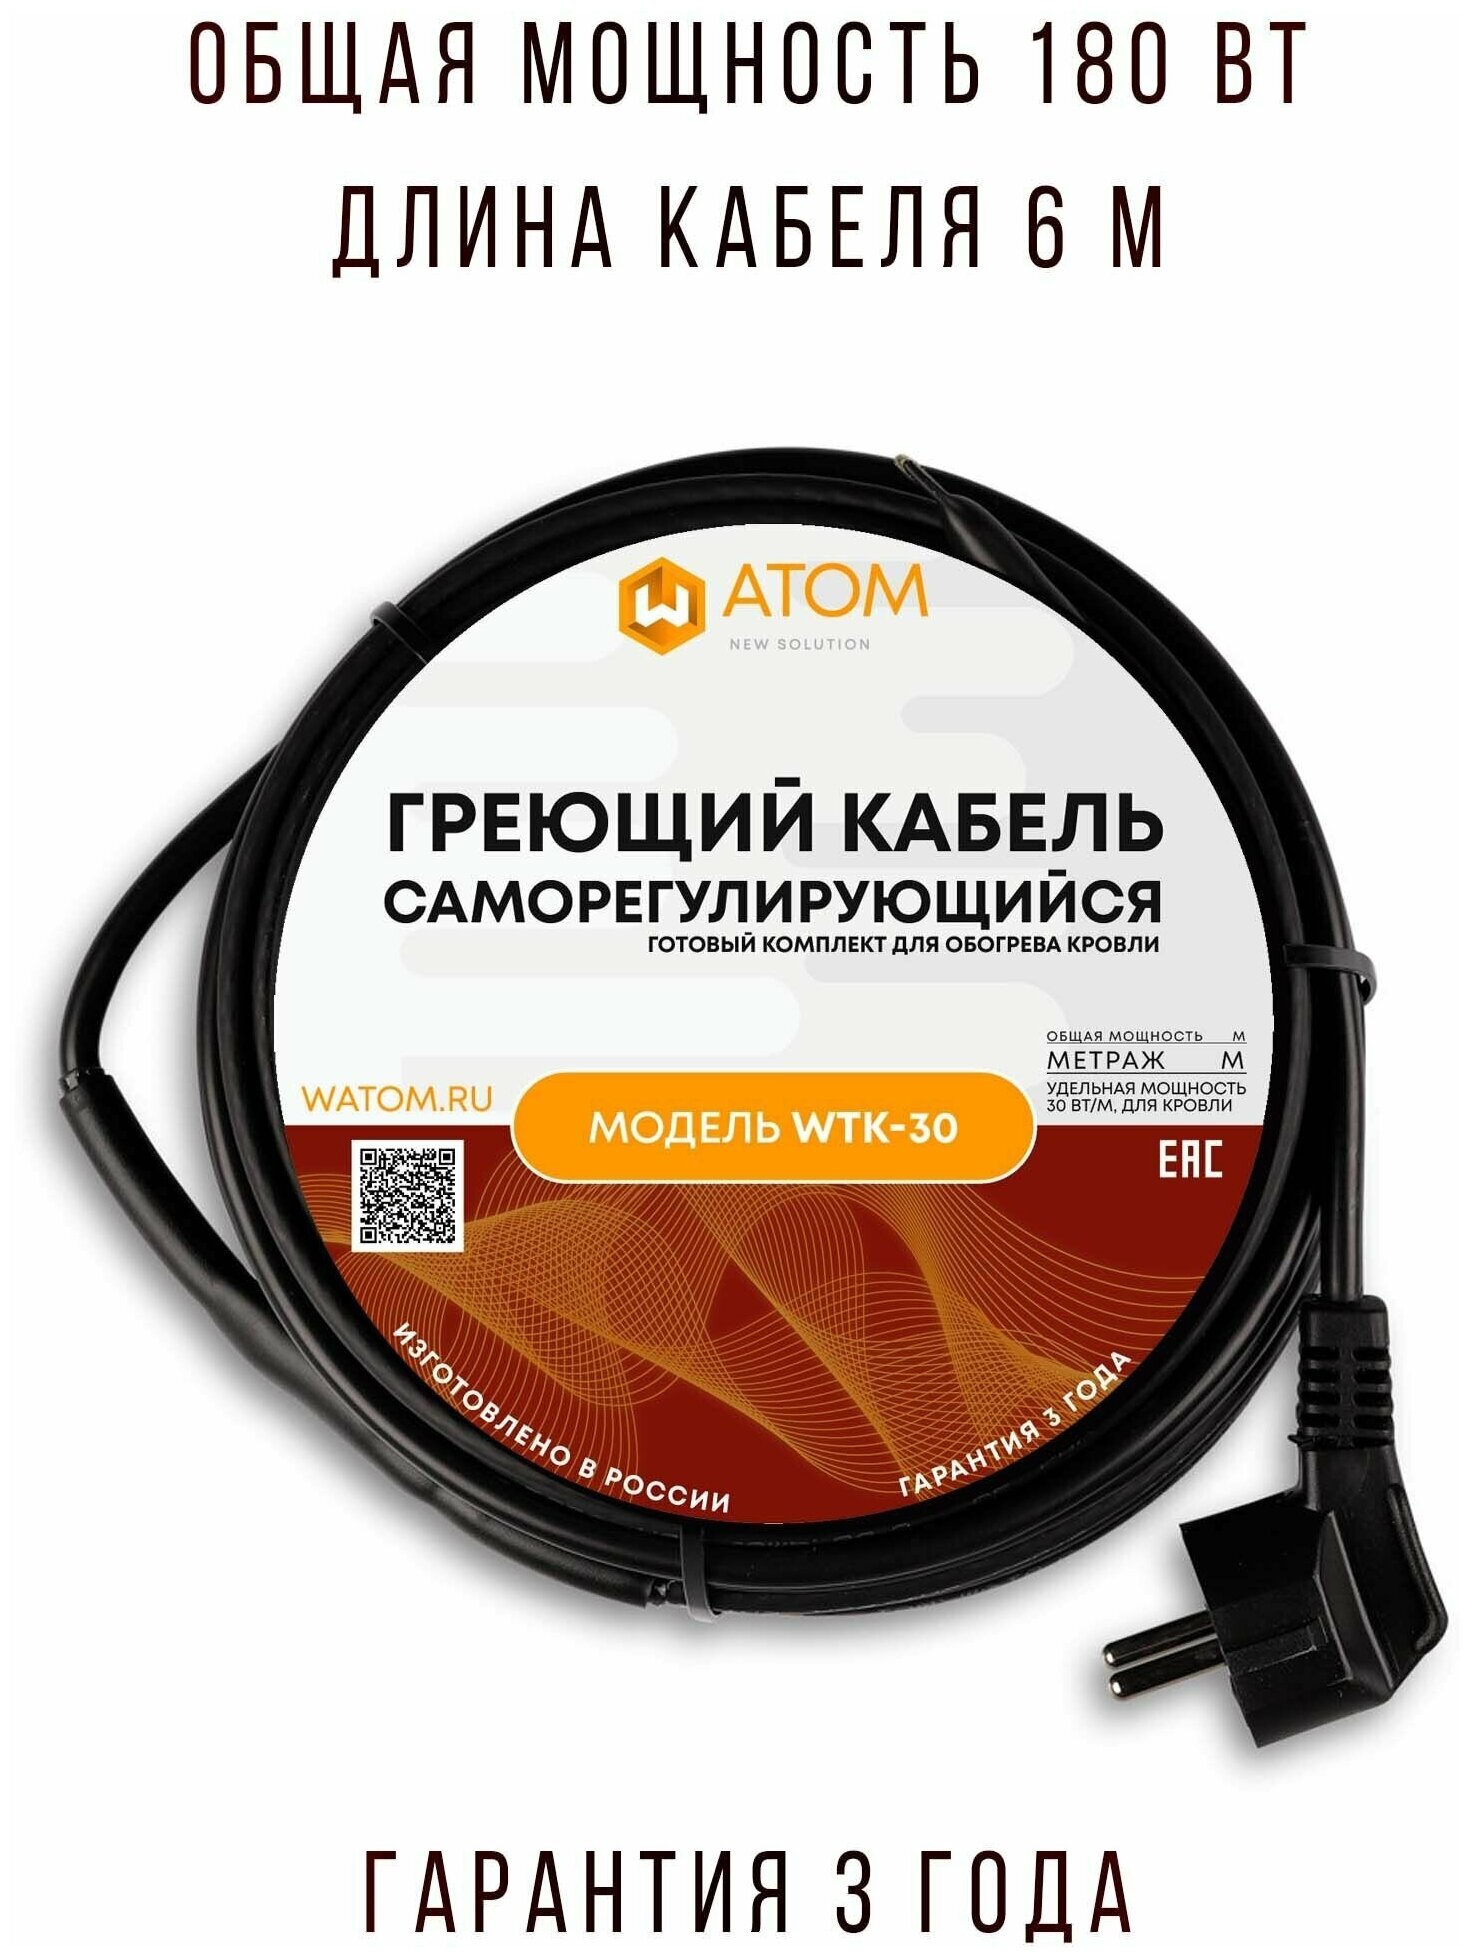 Саморегулирующийся греющий кабель для кровли WATOM WTK-30 30 Вт/м